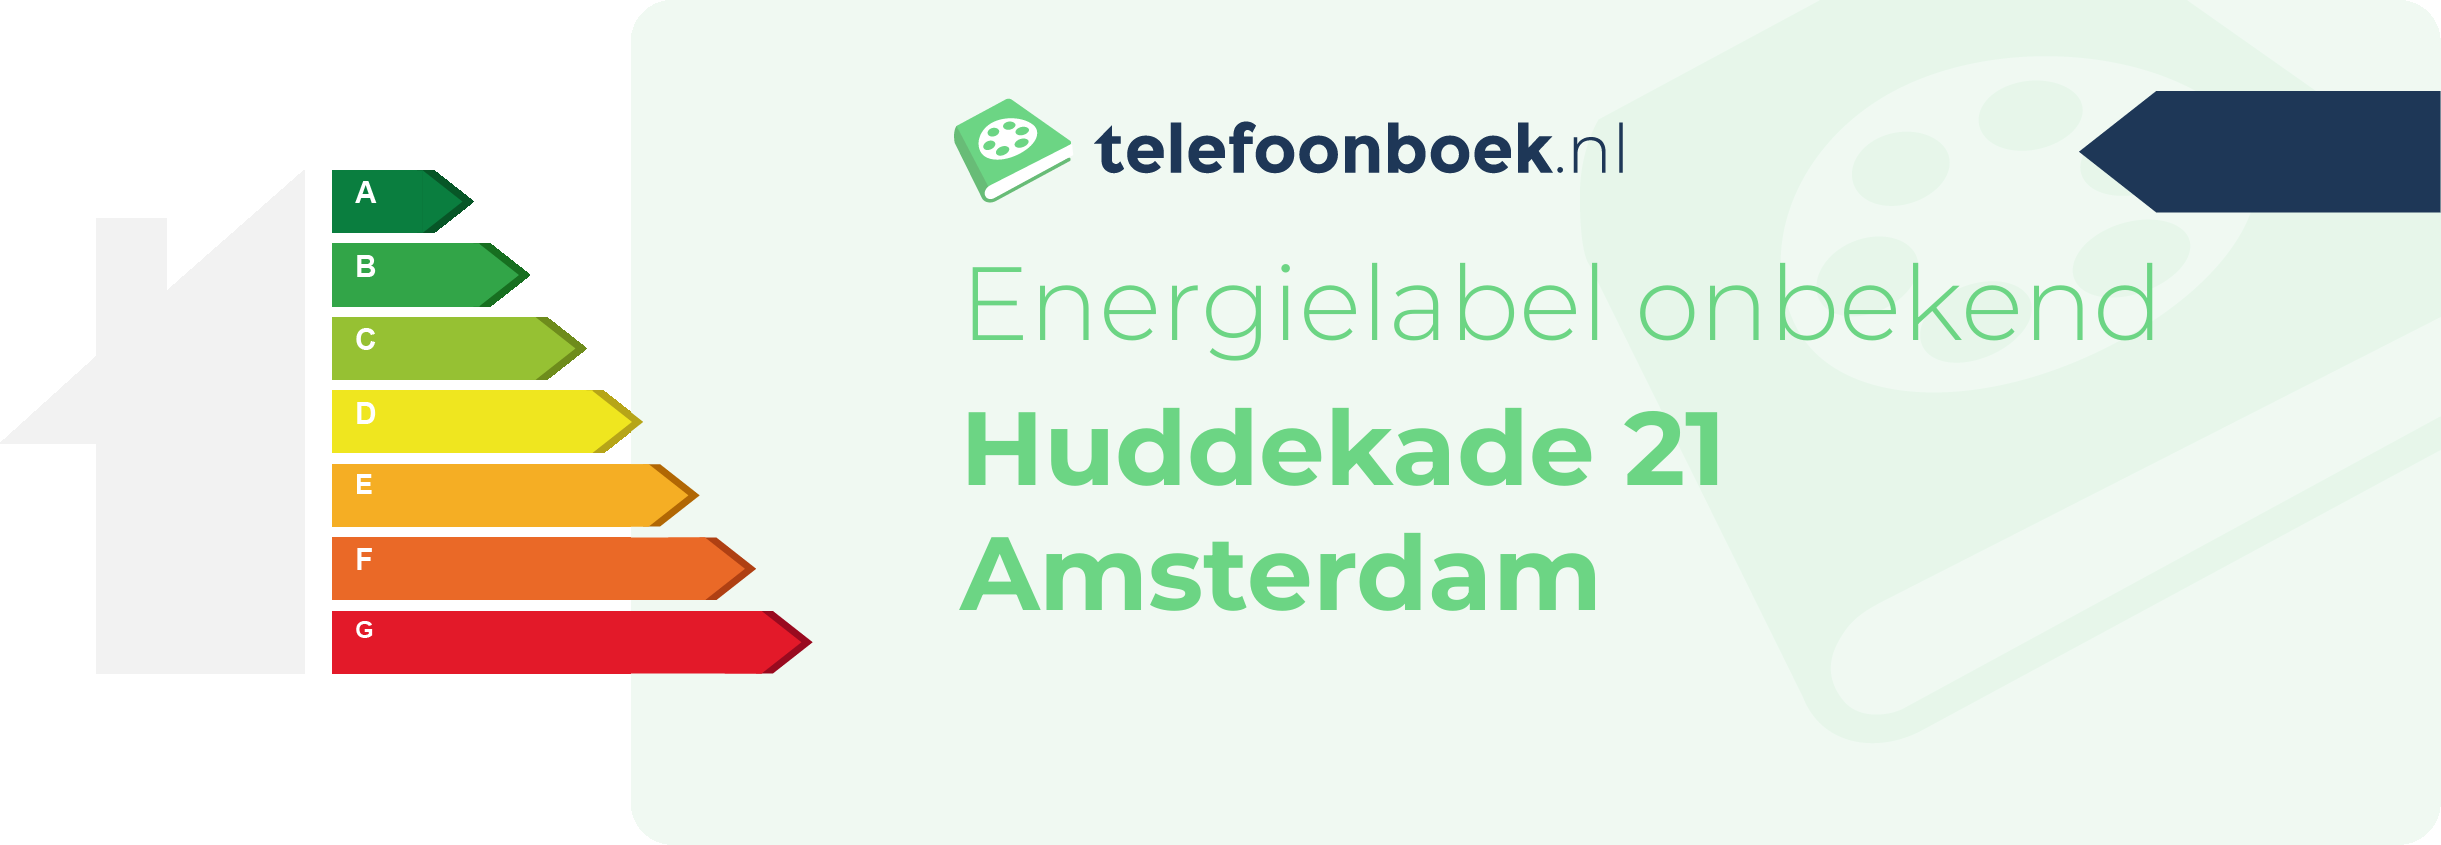 Energielabel Huddekade 21 Amsterdam